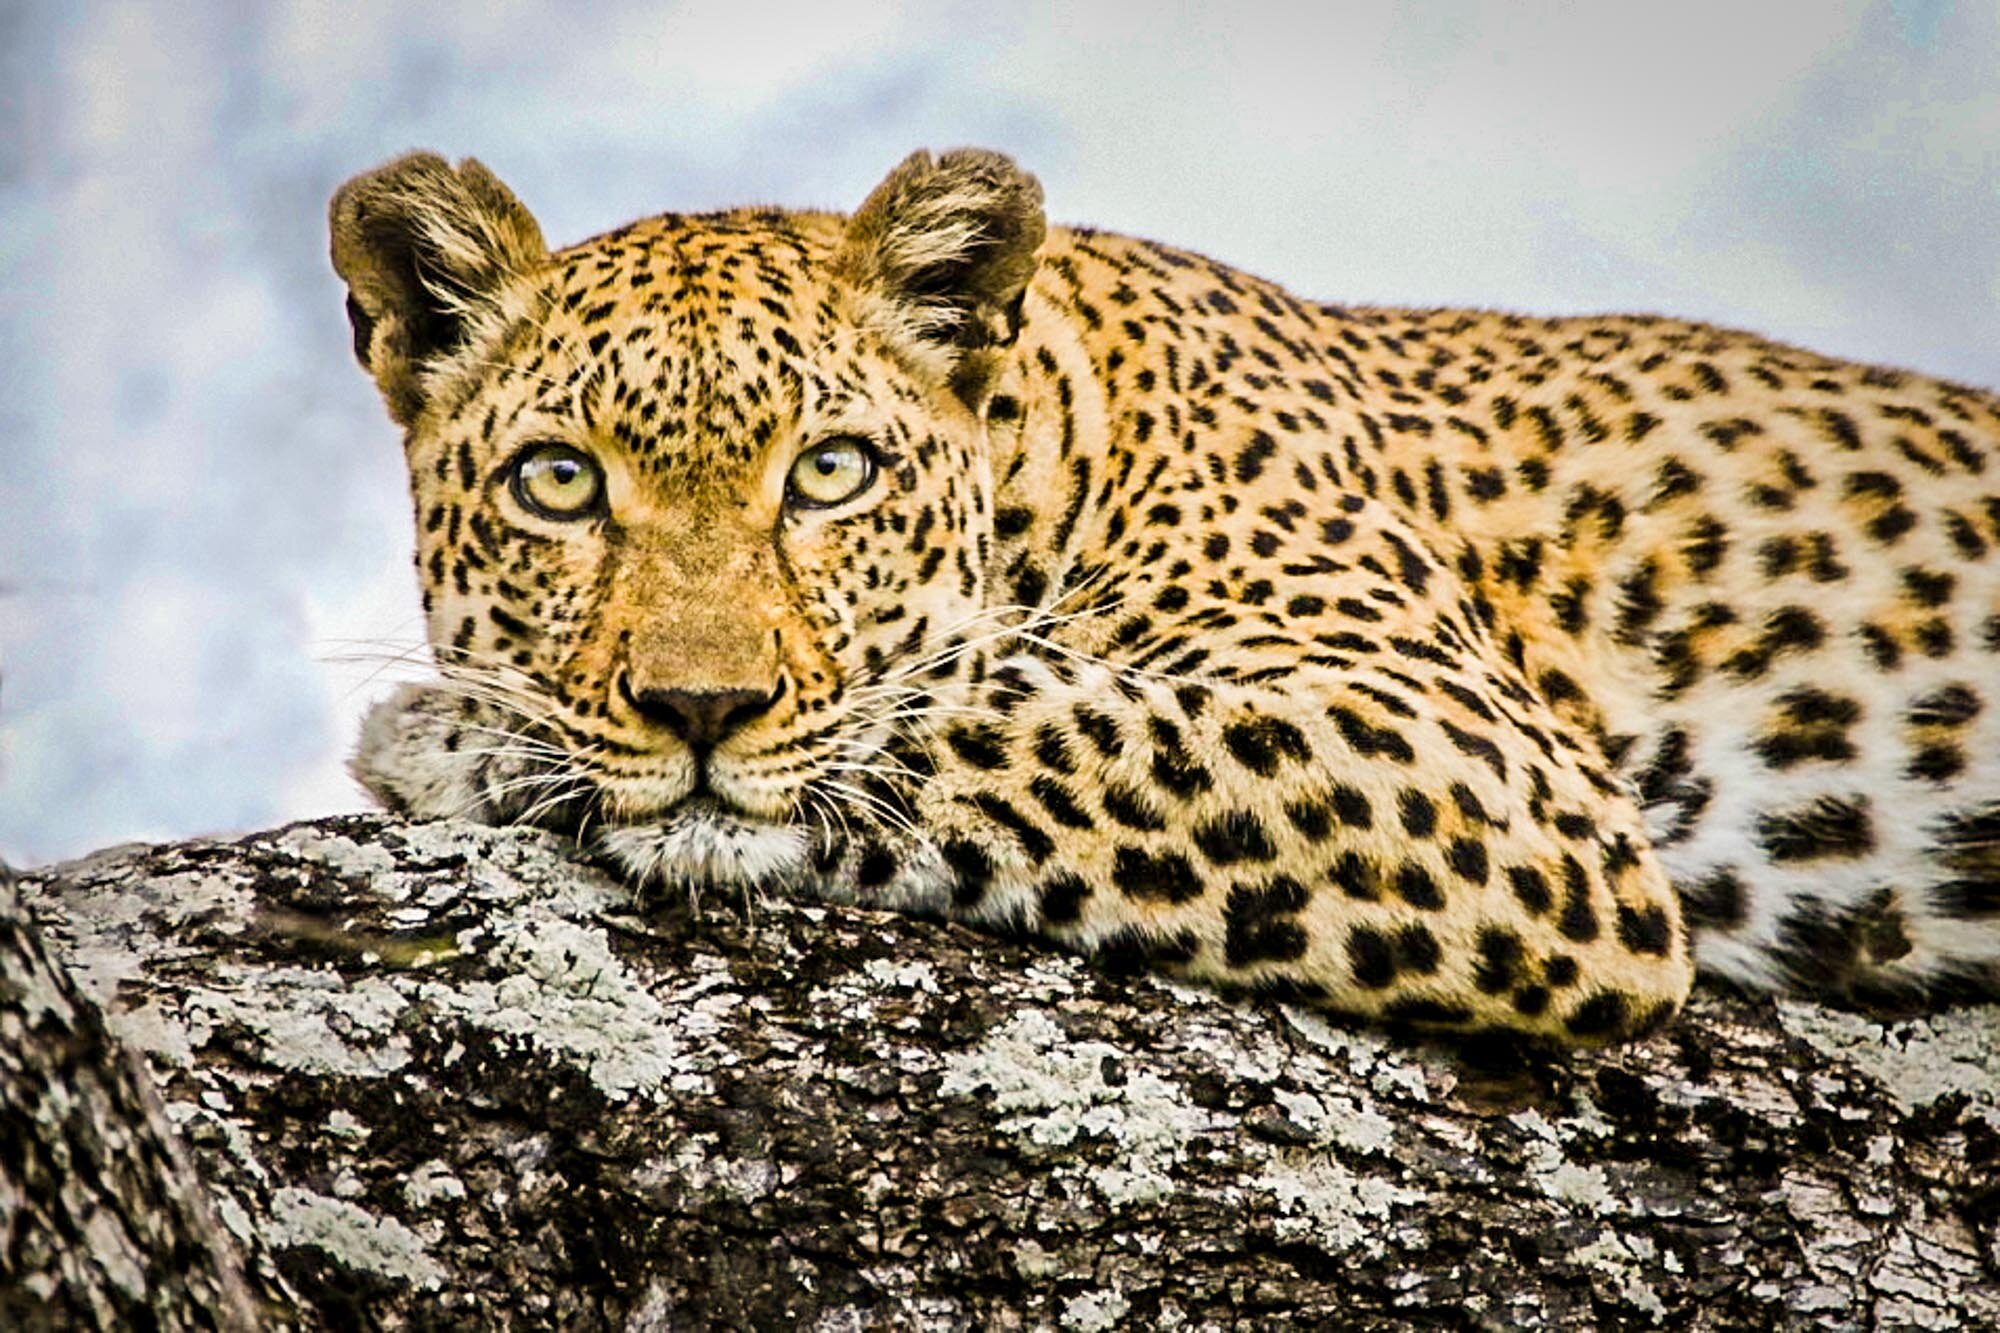 Leopard_in_tree_South_Africa_Safari_2016_©_Howard_Wolff-7.jpg